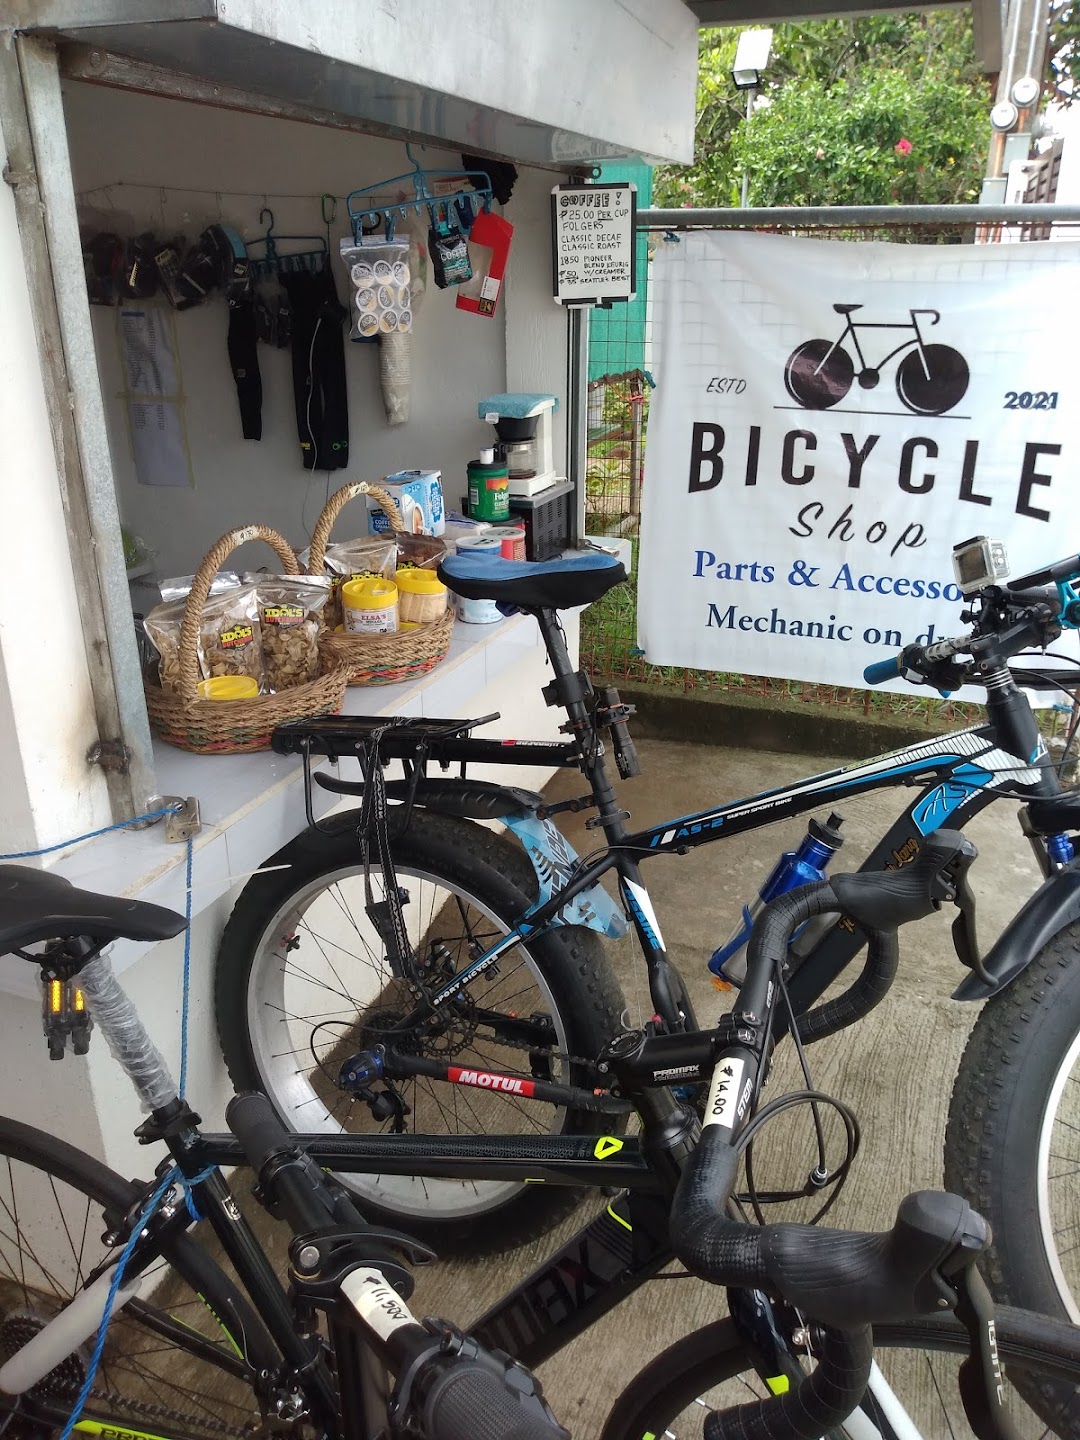 Jj Bike Shop Cafe Bulacan Specialties Chicharon & Butchiron Bicycle parts accesories